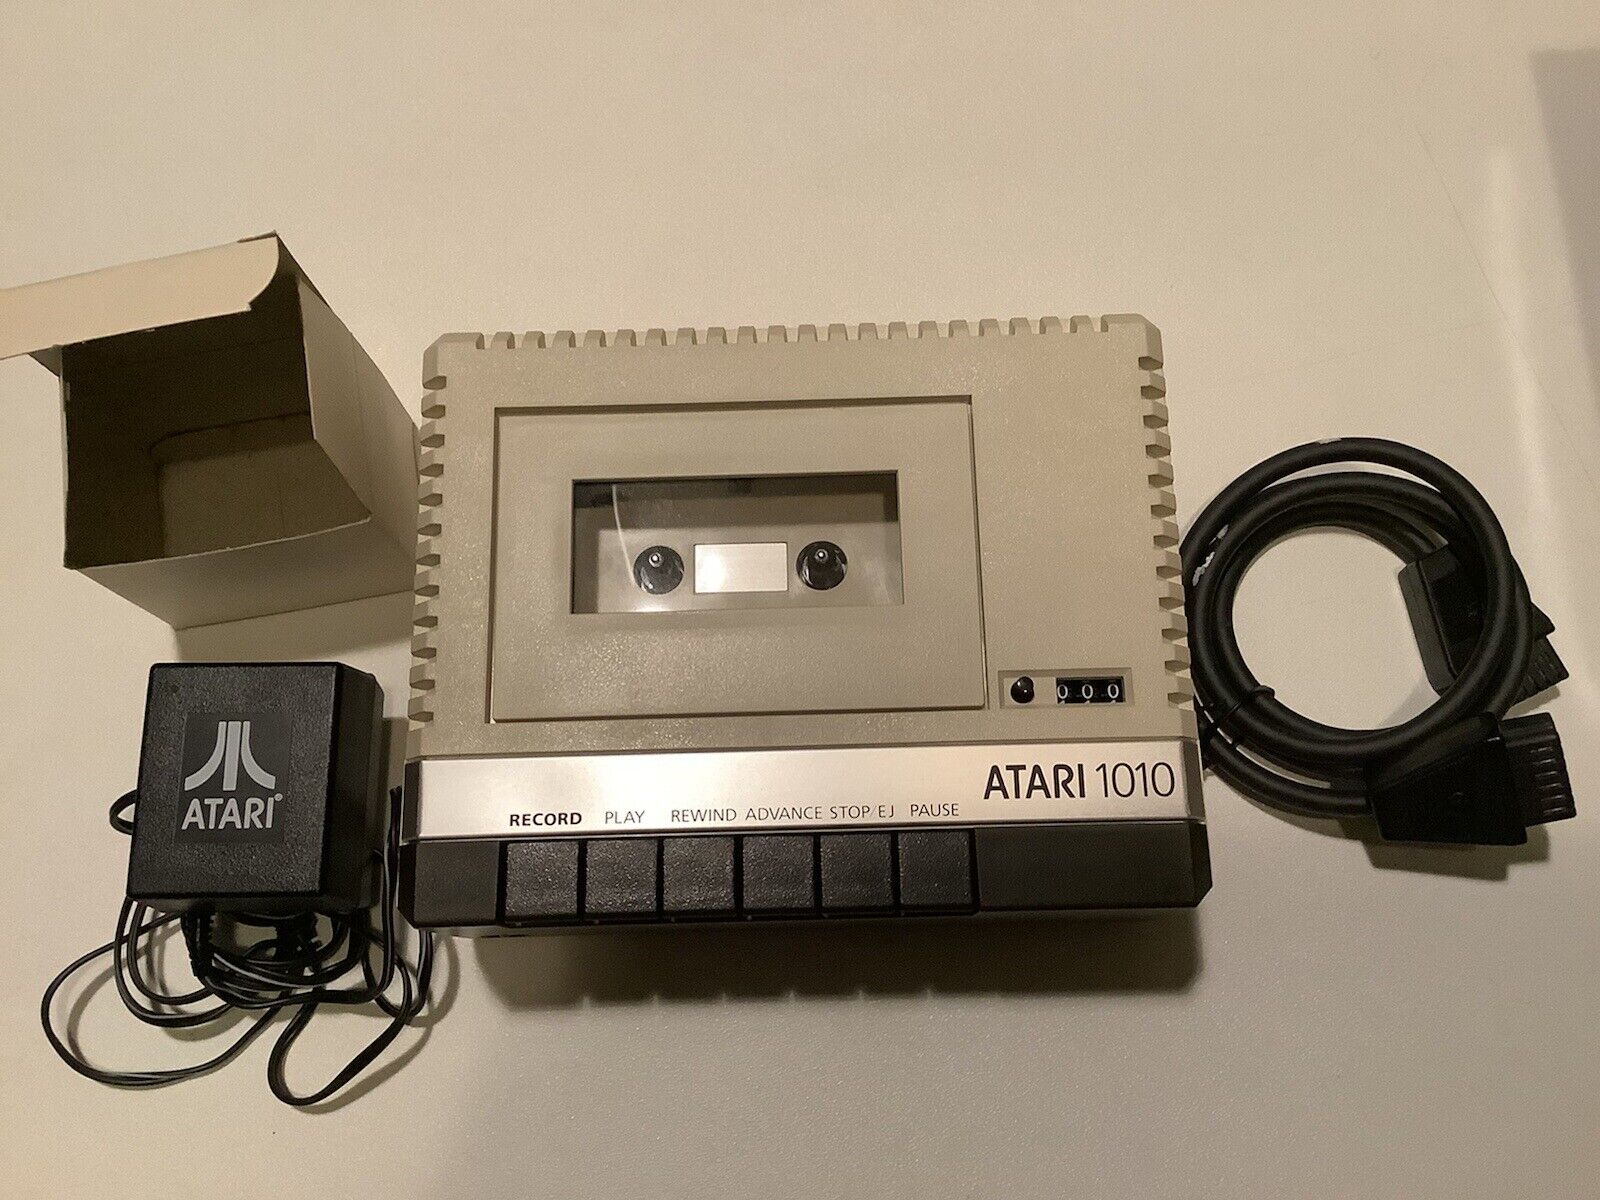 Atari 1010 Program Recorder with Original Box, Power Supply And Cable. READ